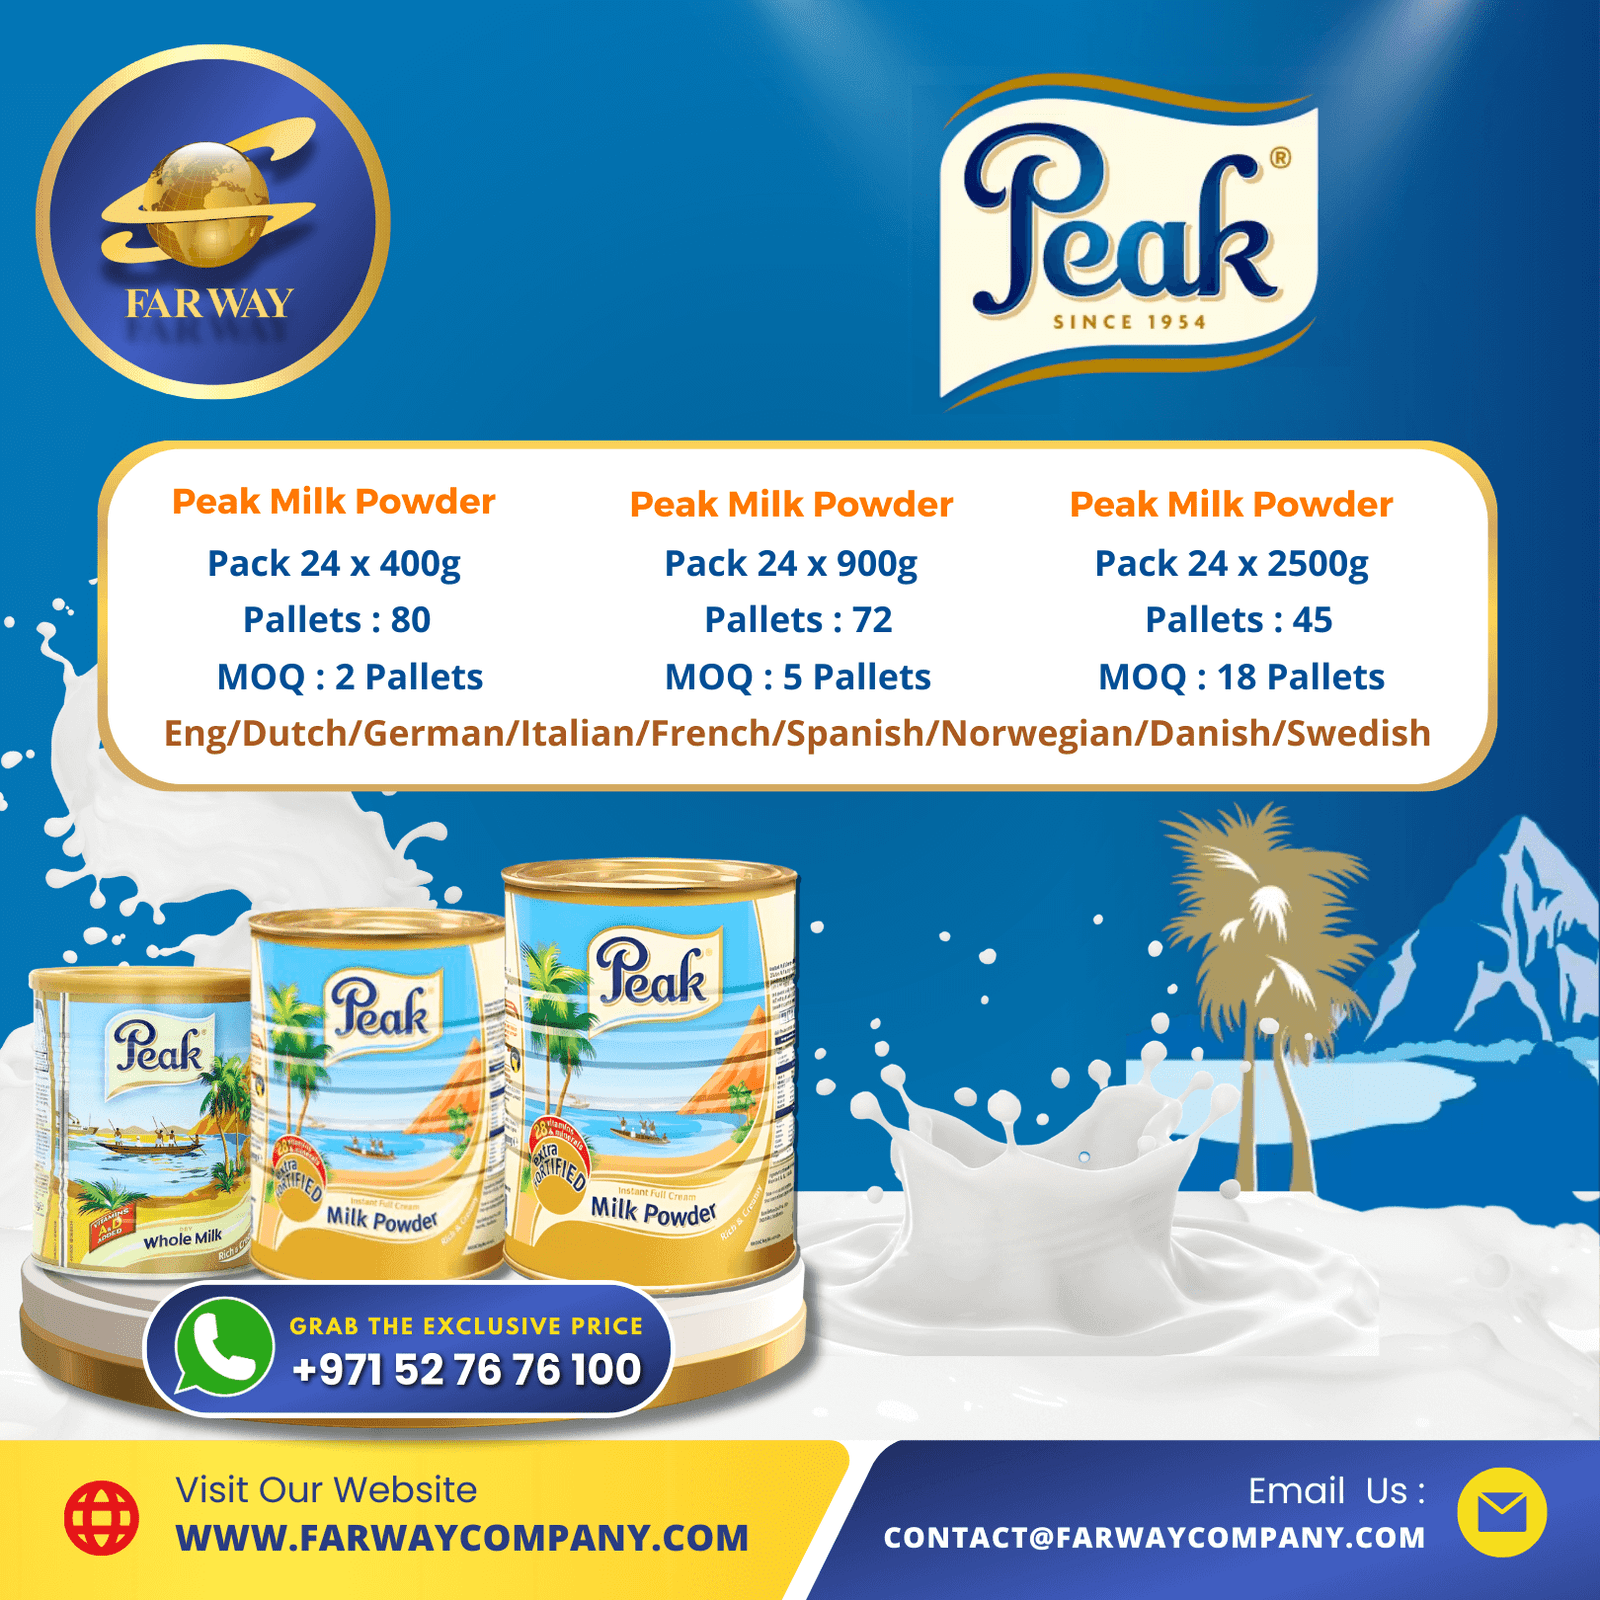 Peak Milk Powder Importer, Exporter & Milk Powder Distributor in Dubai, UAE, Middle East